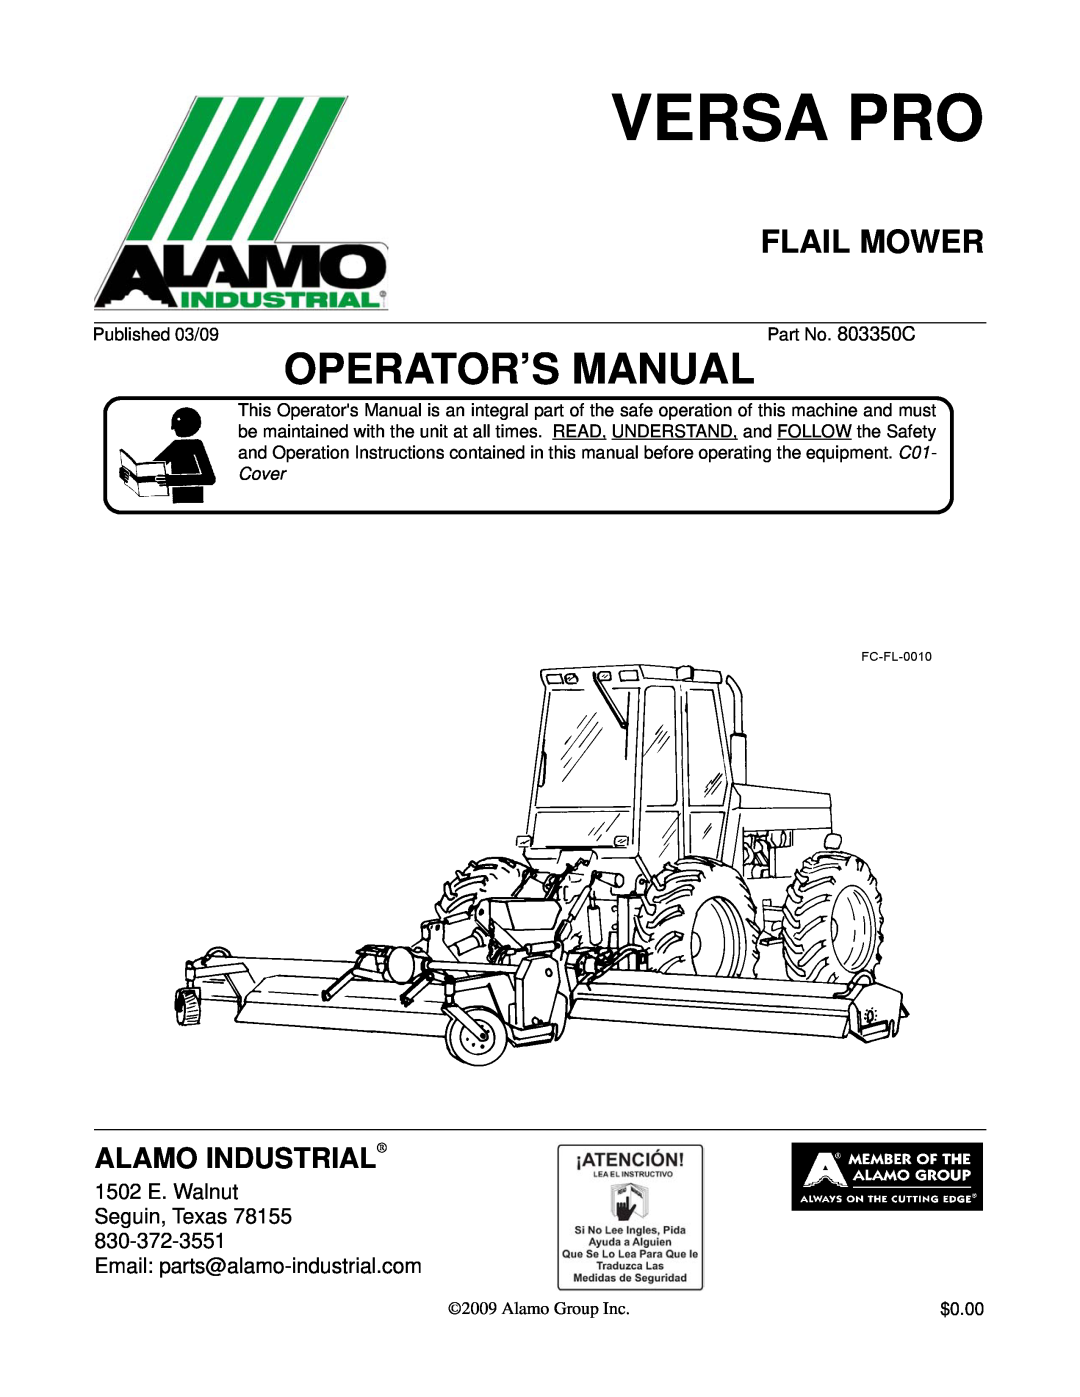 Alamo 803350C manual Versa Pro, Flail Mower, 1502 E. Walnut Seguin, Texas 78155, Email: parts@alamo-industrial.com 